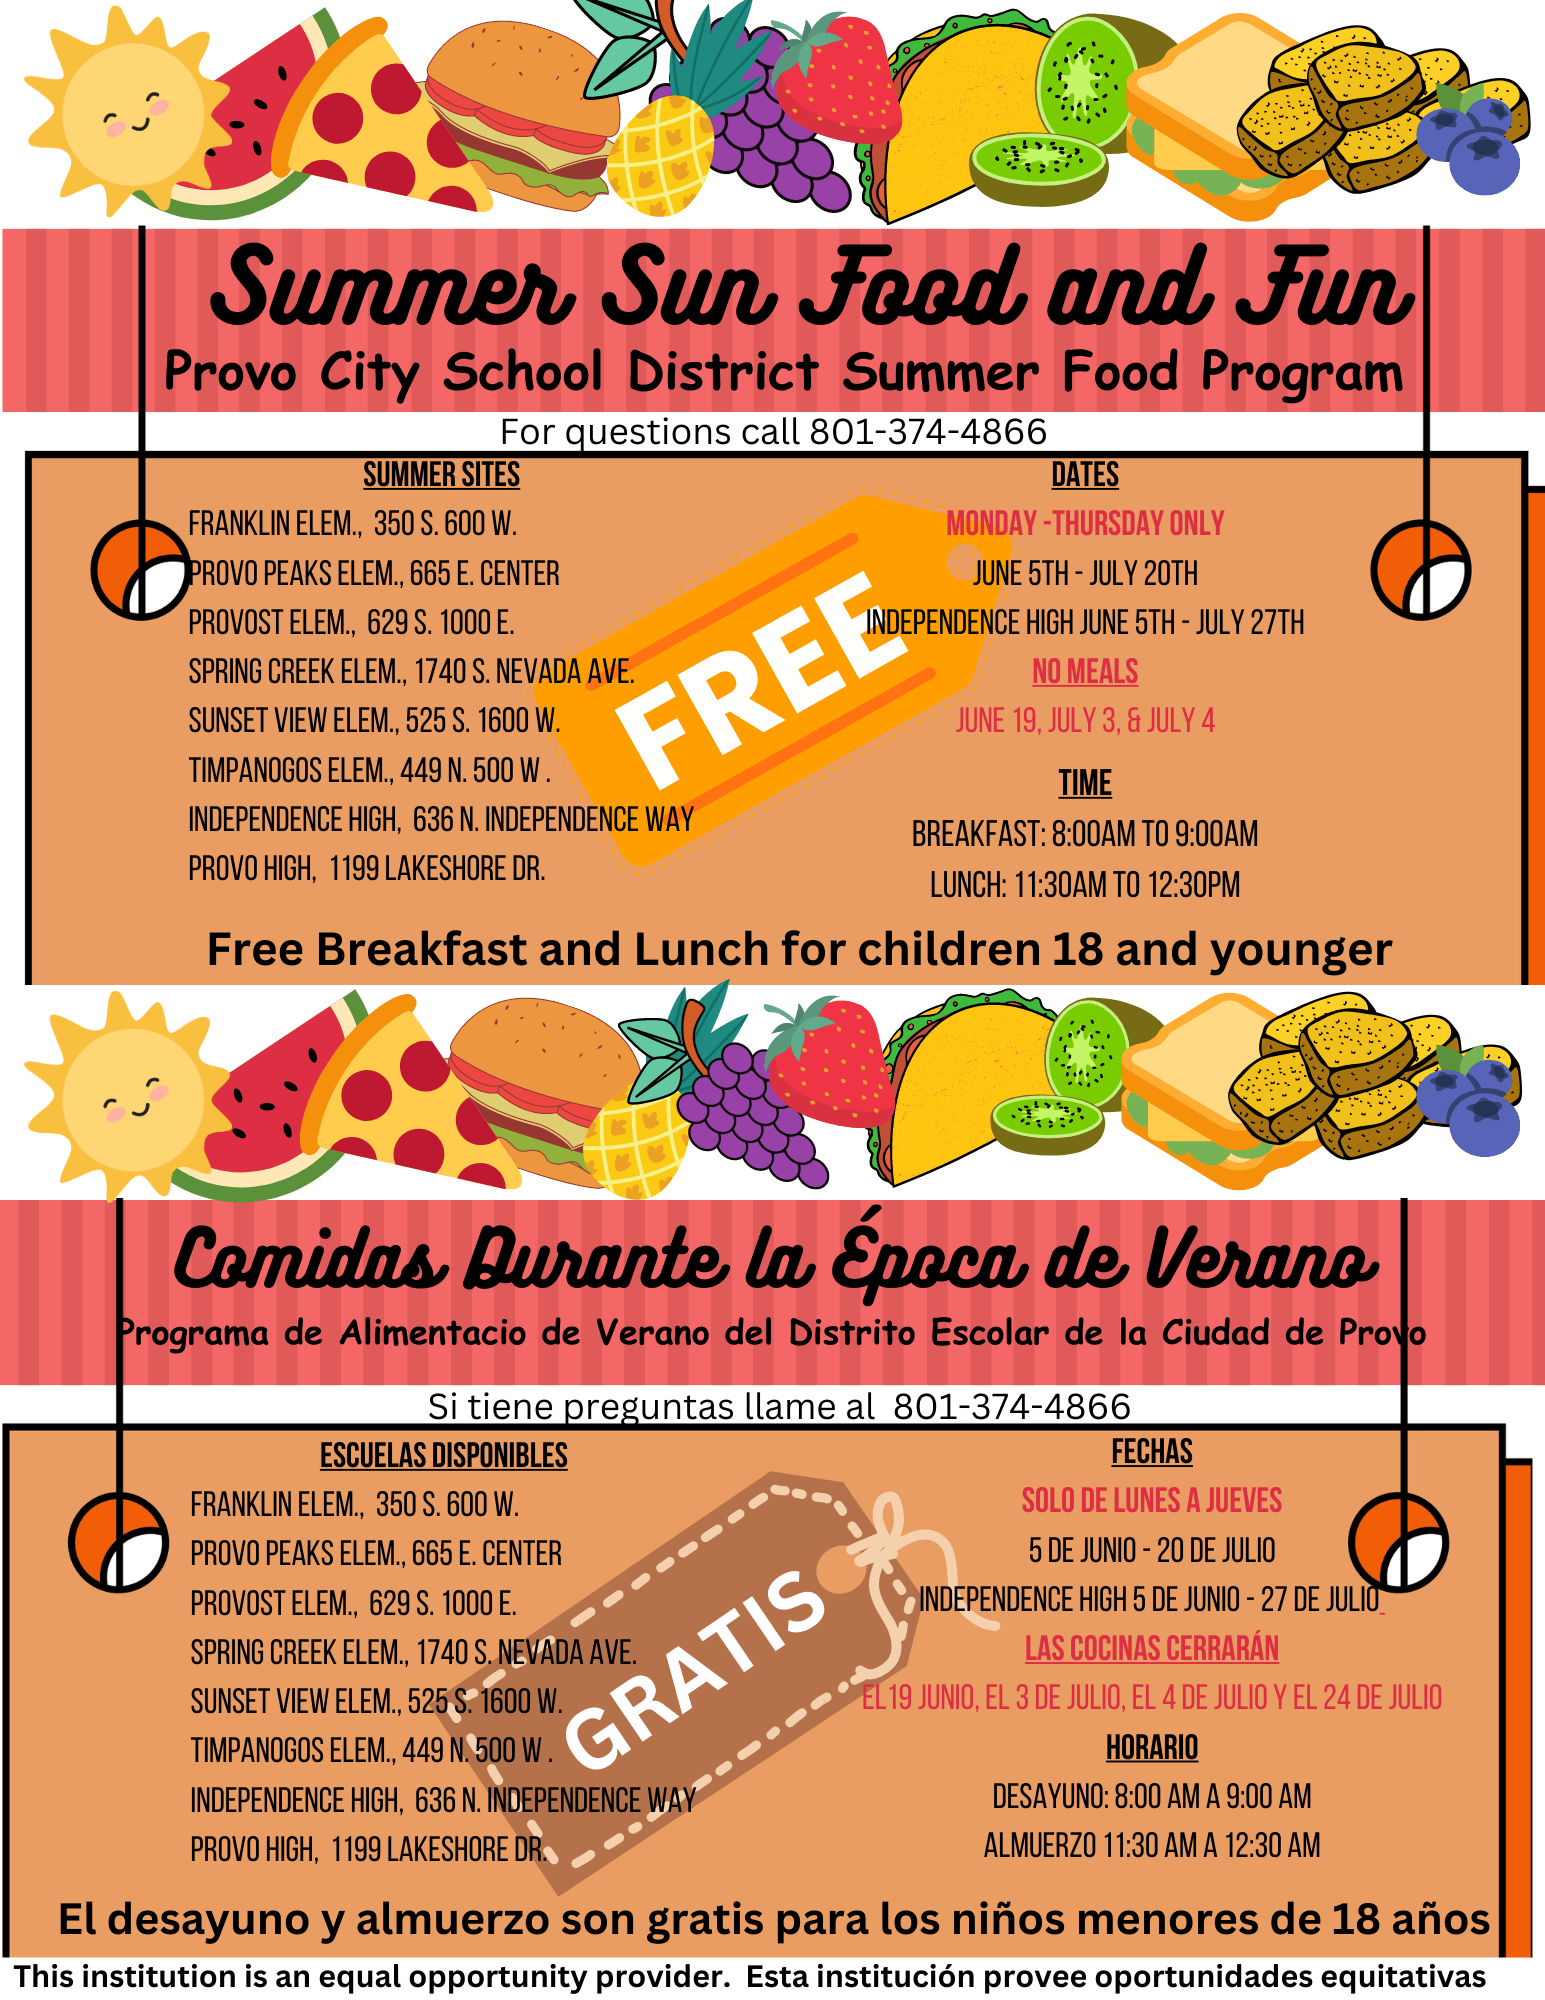 Summer Sun Food and Fun flyer.